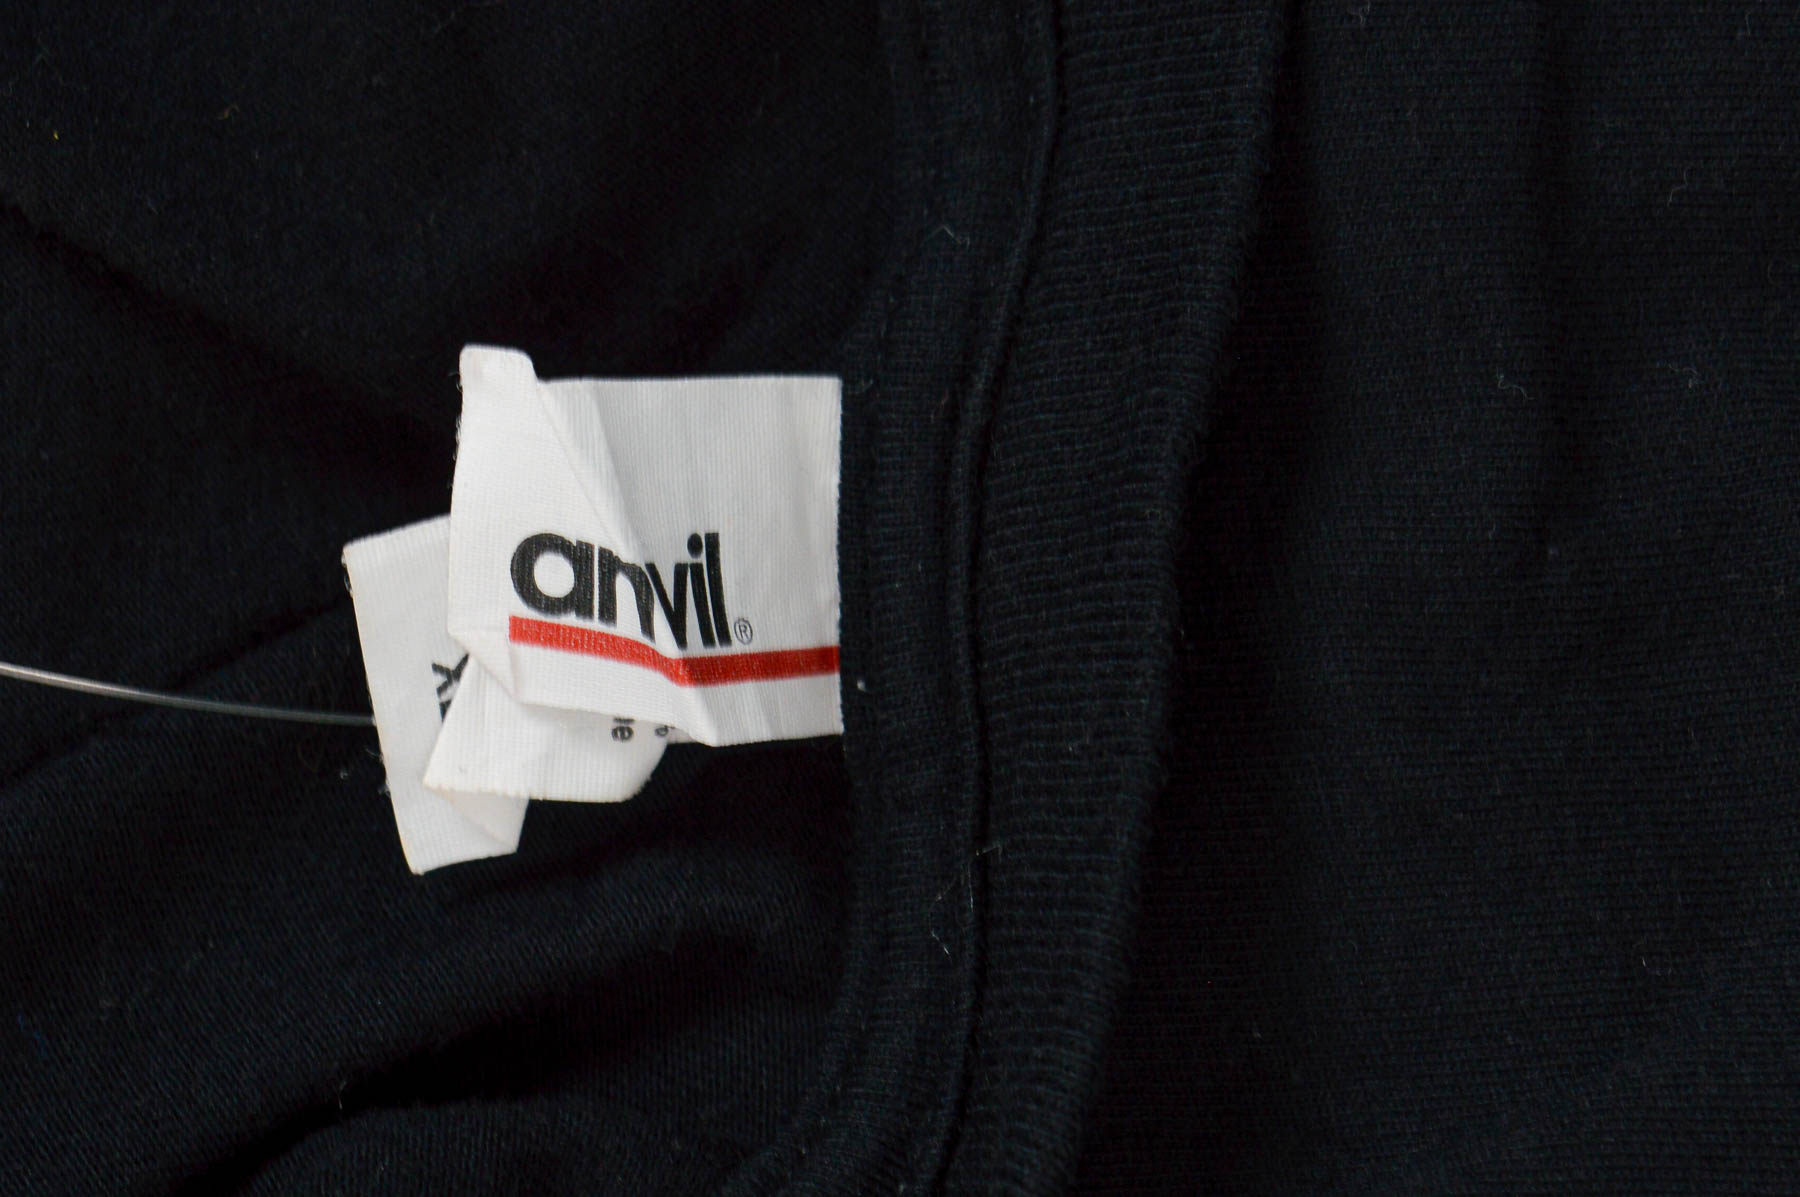 Men's T-shirt - Anvil - 2